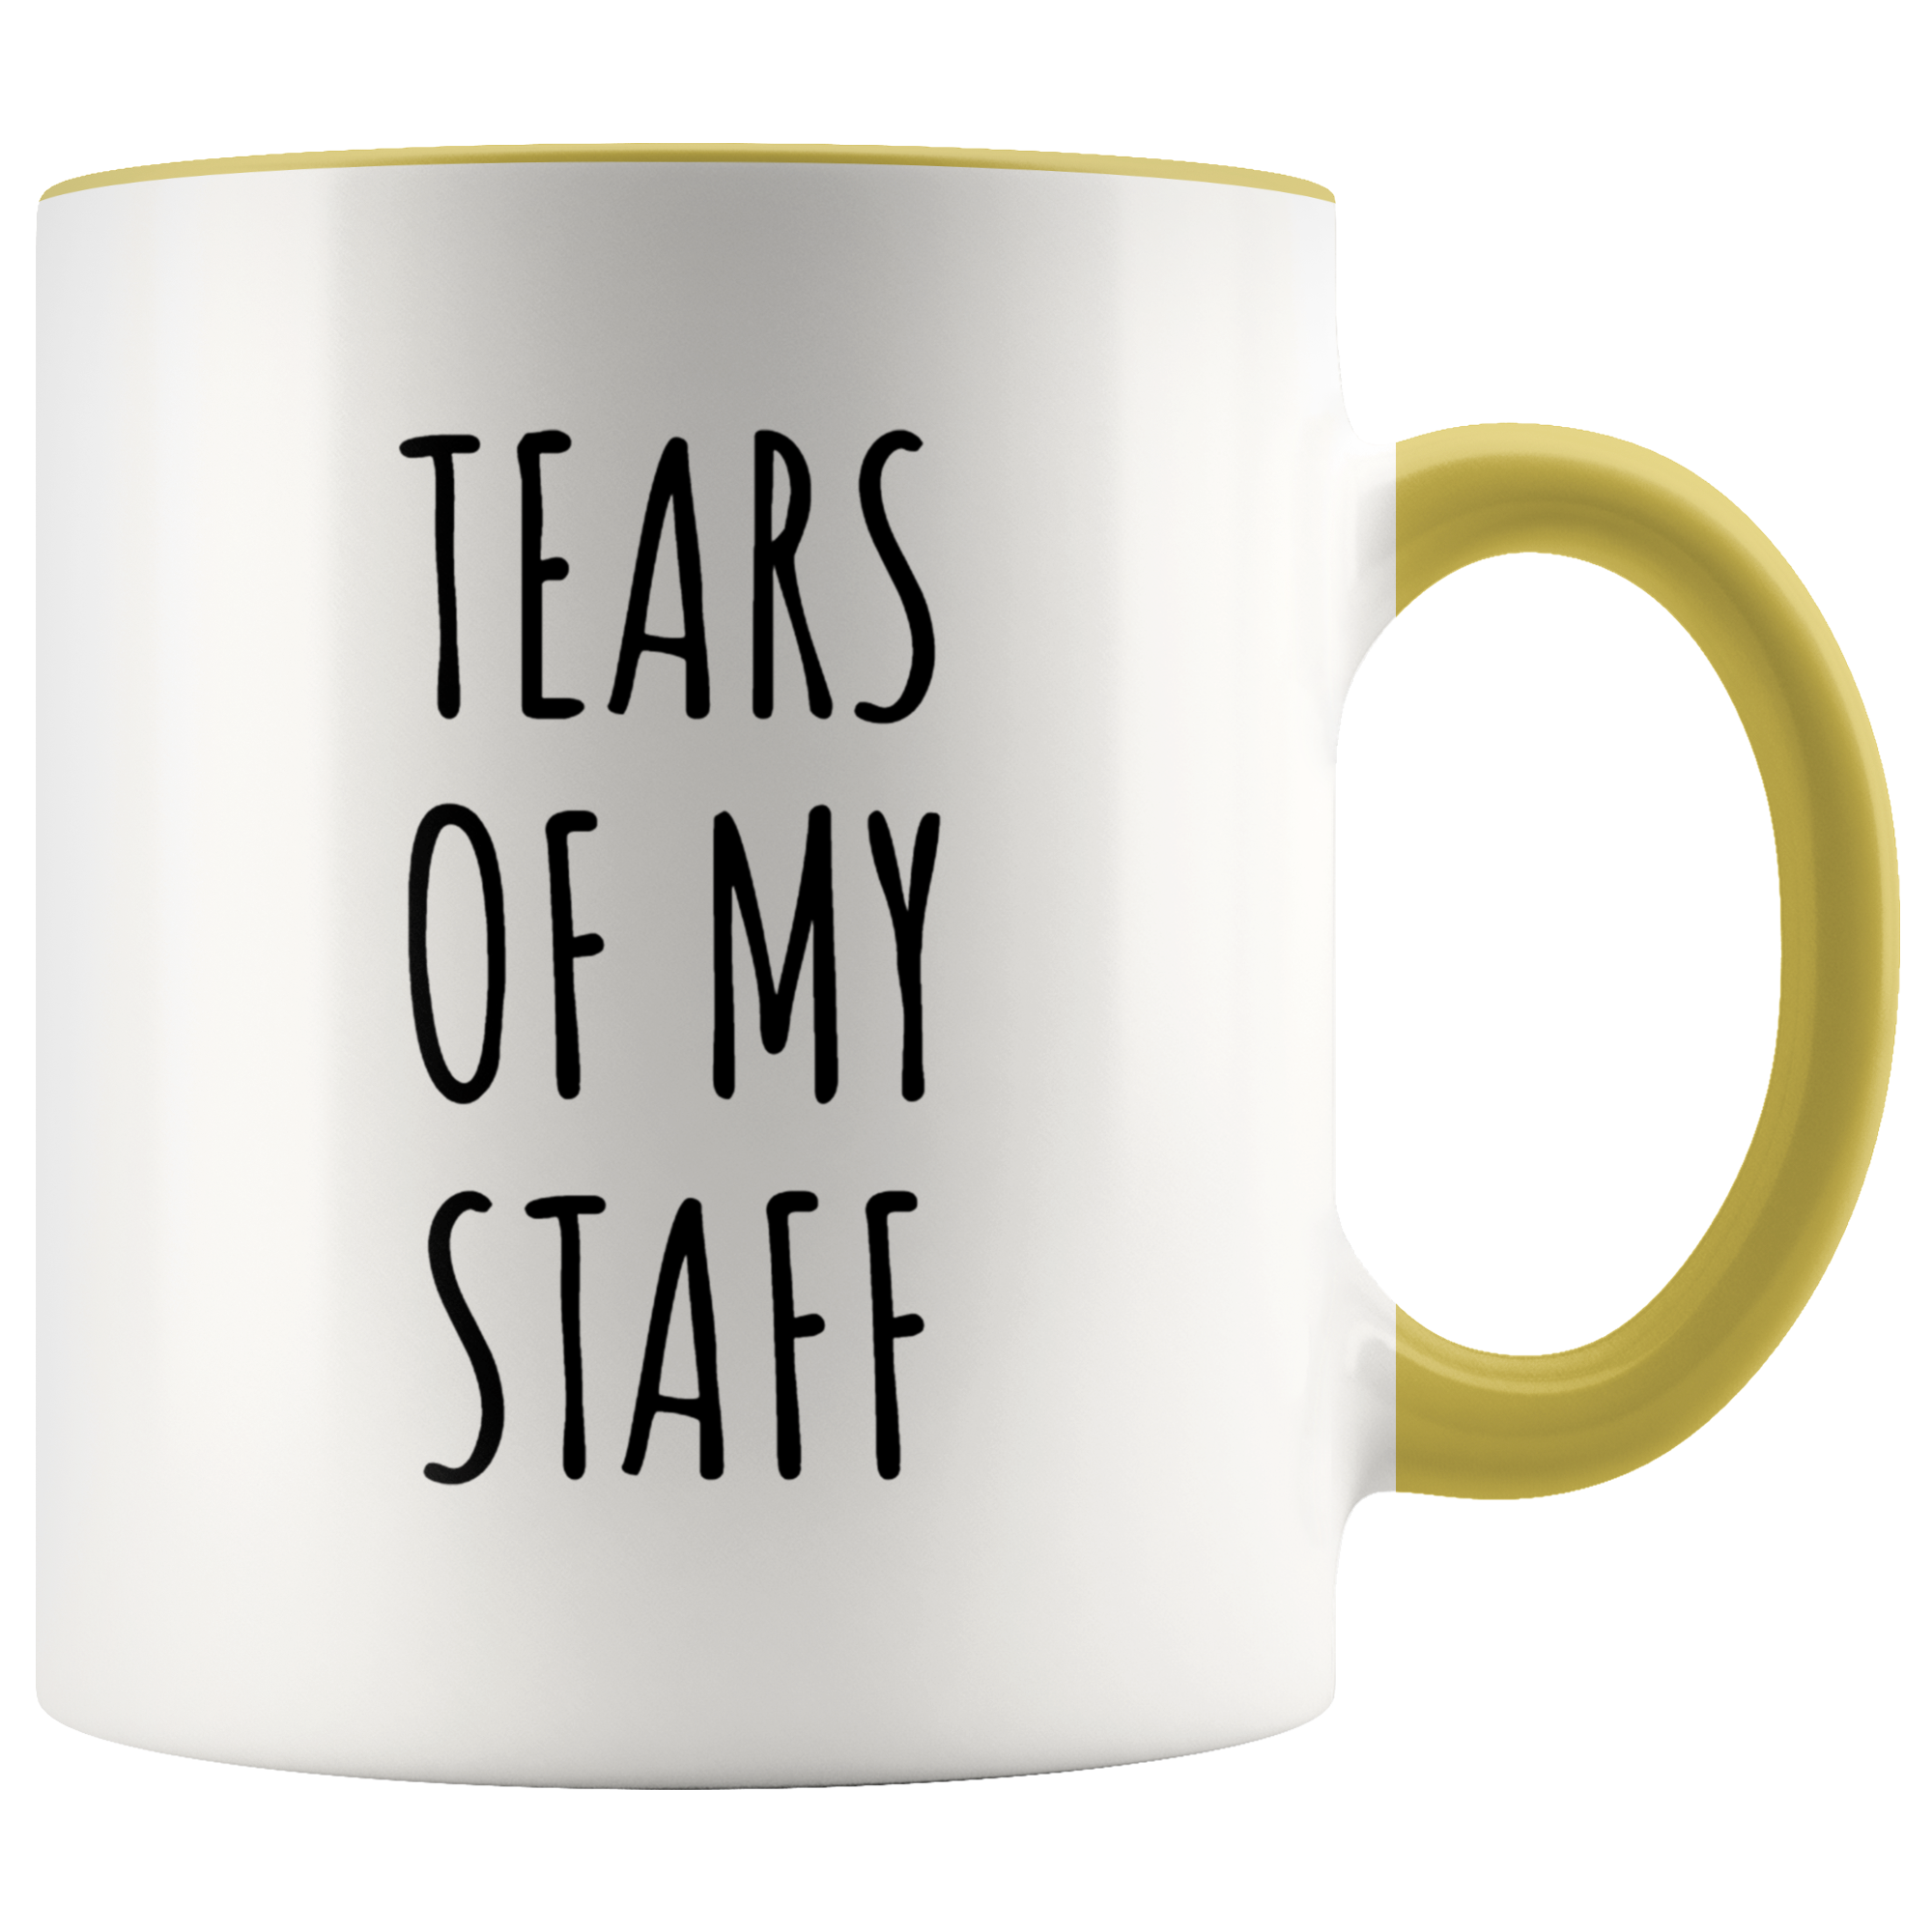 Tears Of My Staff Mug